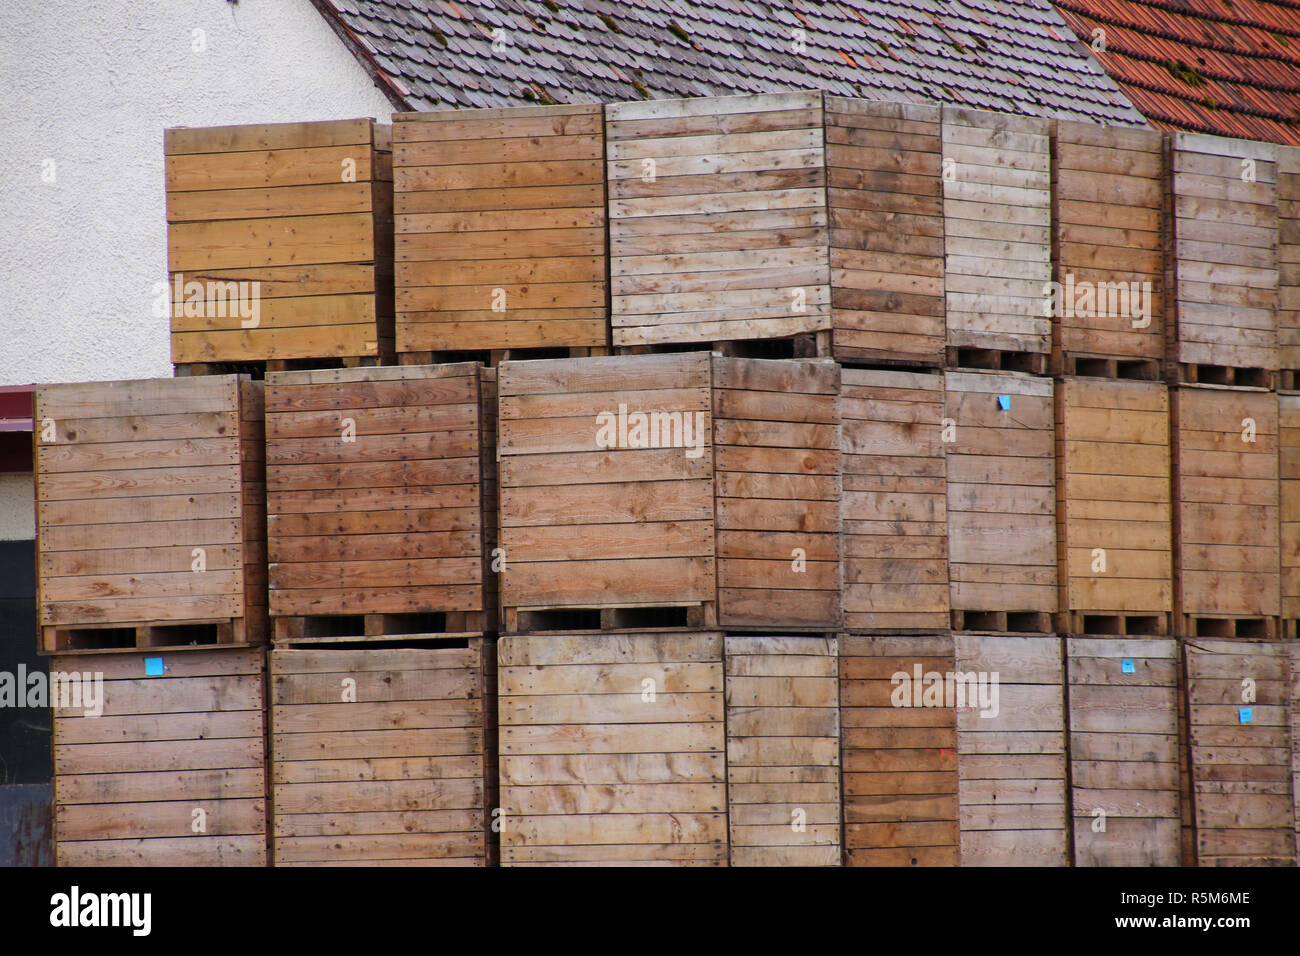 Gestapelte Kisten aus Holz - Landwirtschaft Stockfoto